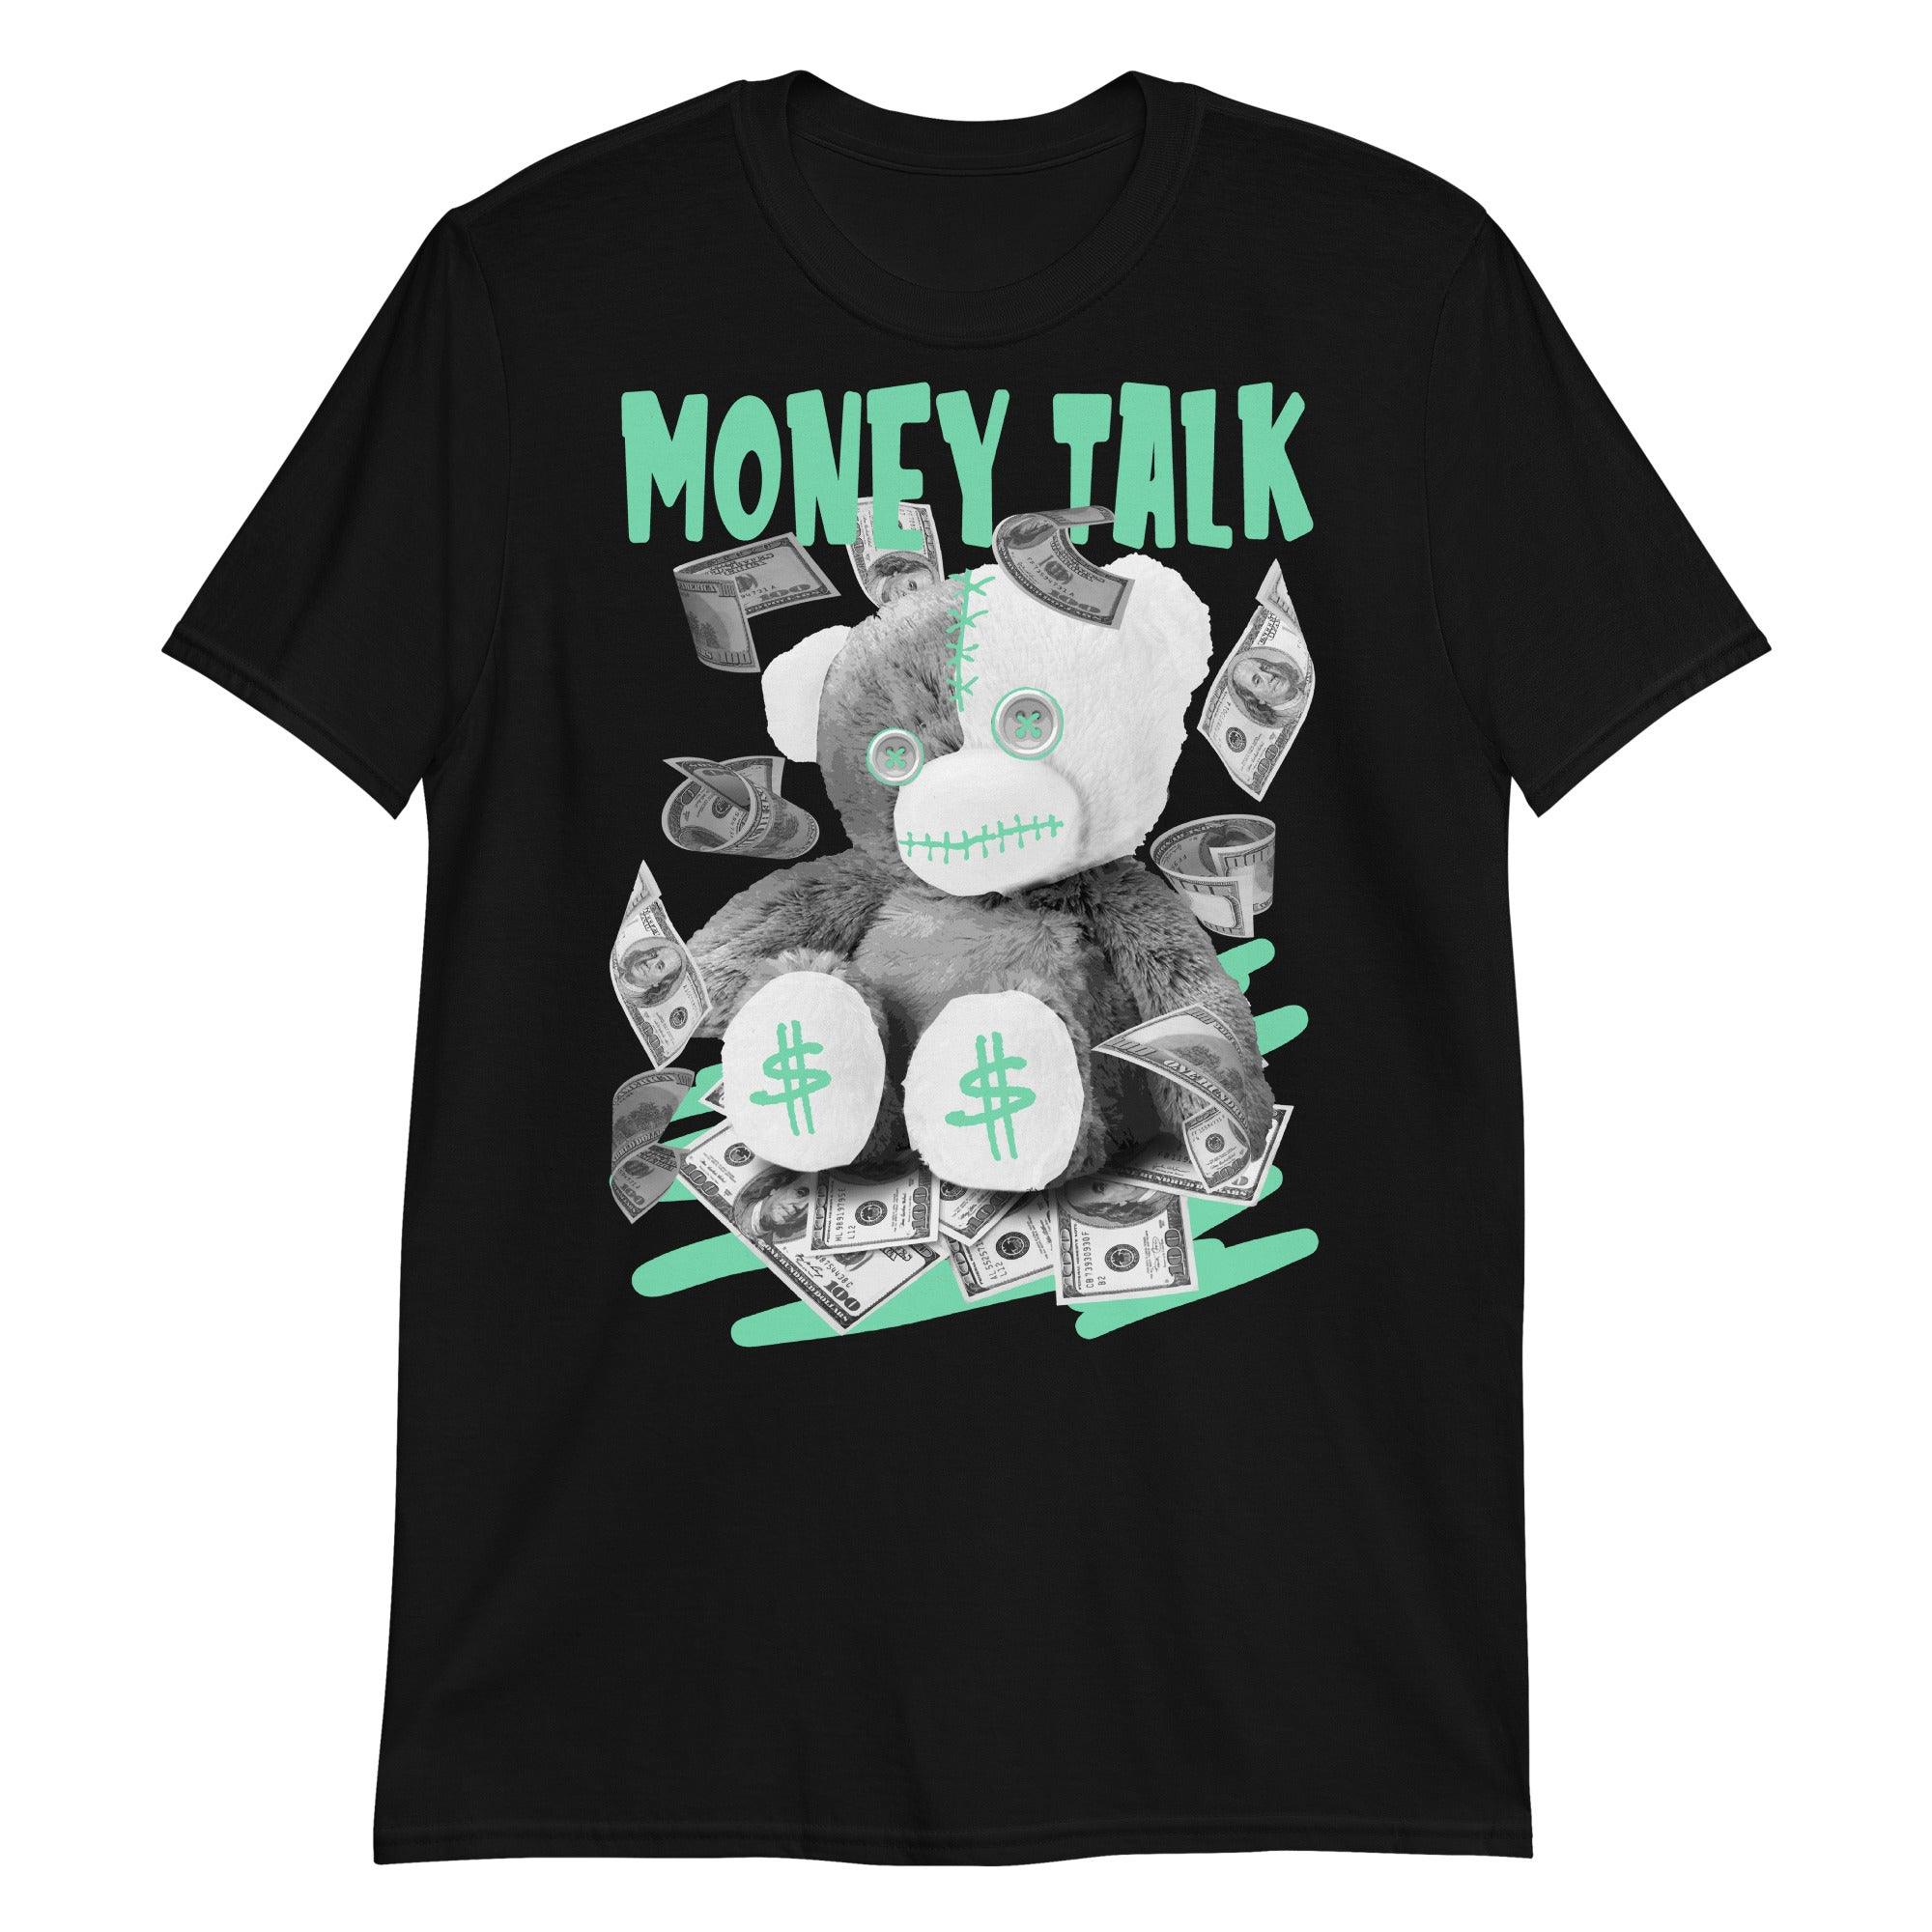 Black Money Talk Shirt Nike Dunk Green Glow photo